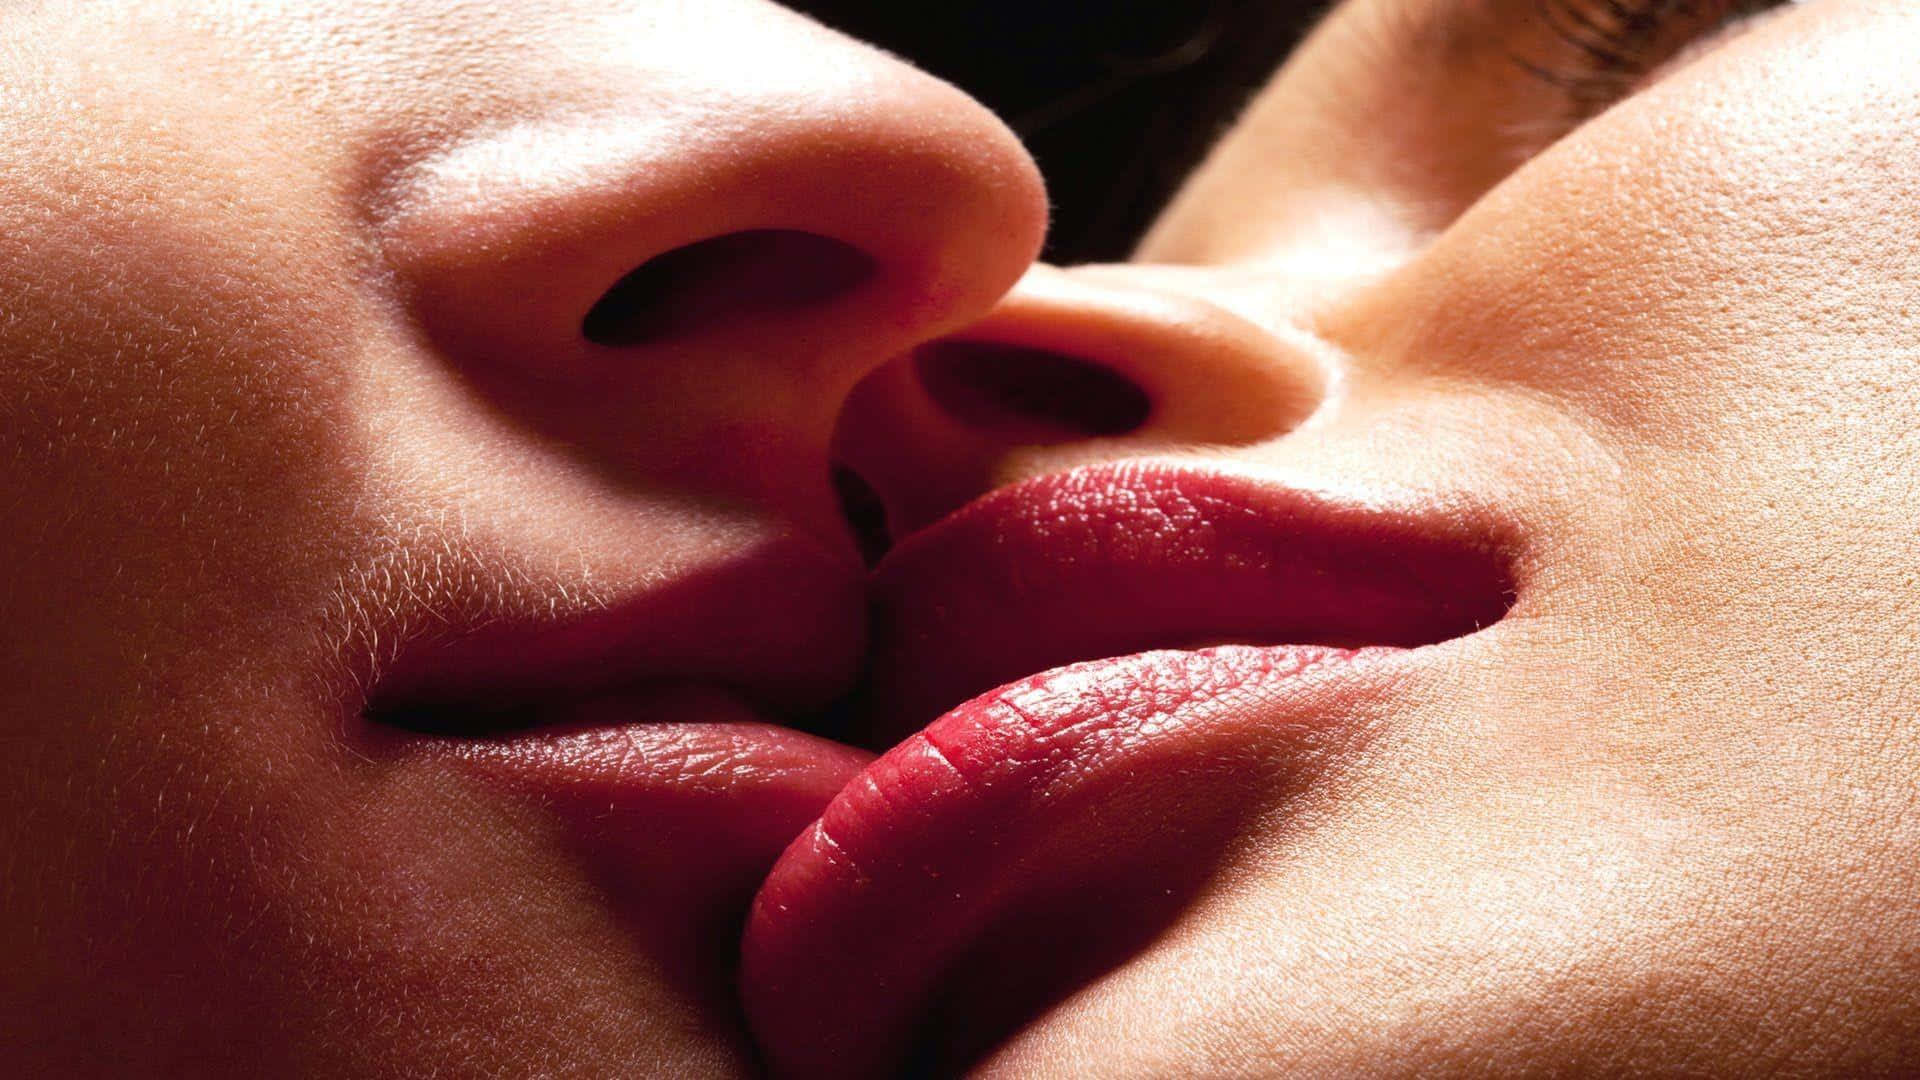 PASSIONATE KISS  lips girl wallpaper  1920x1080  497296  WallpaperUP